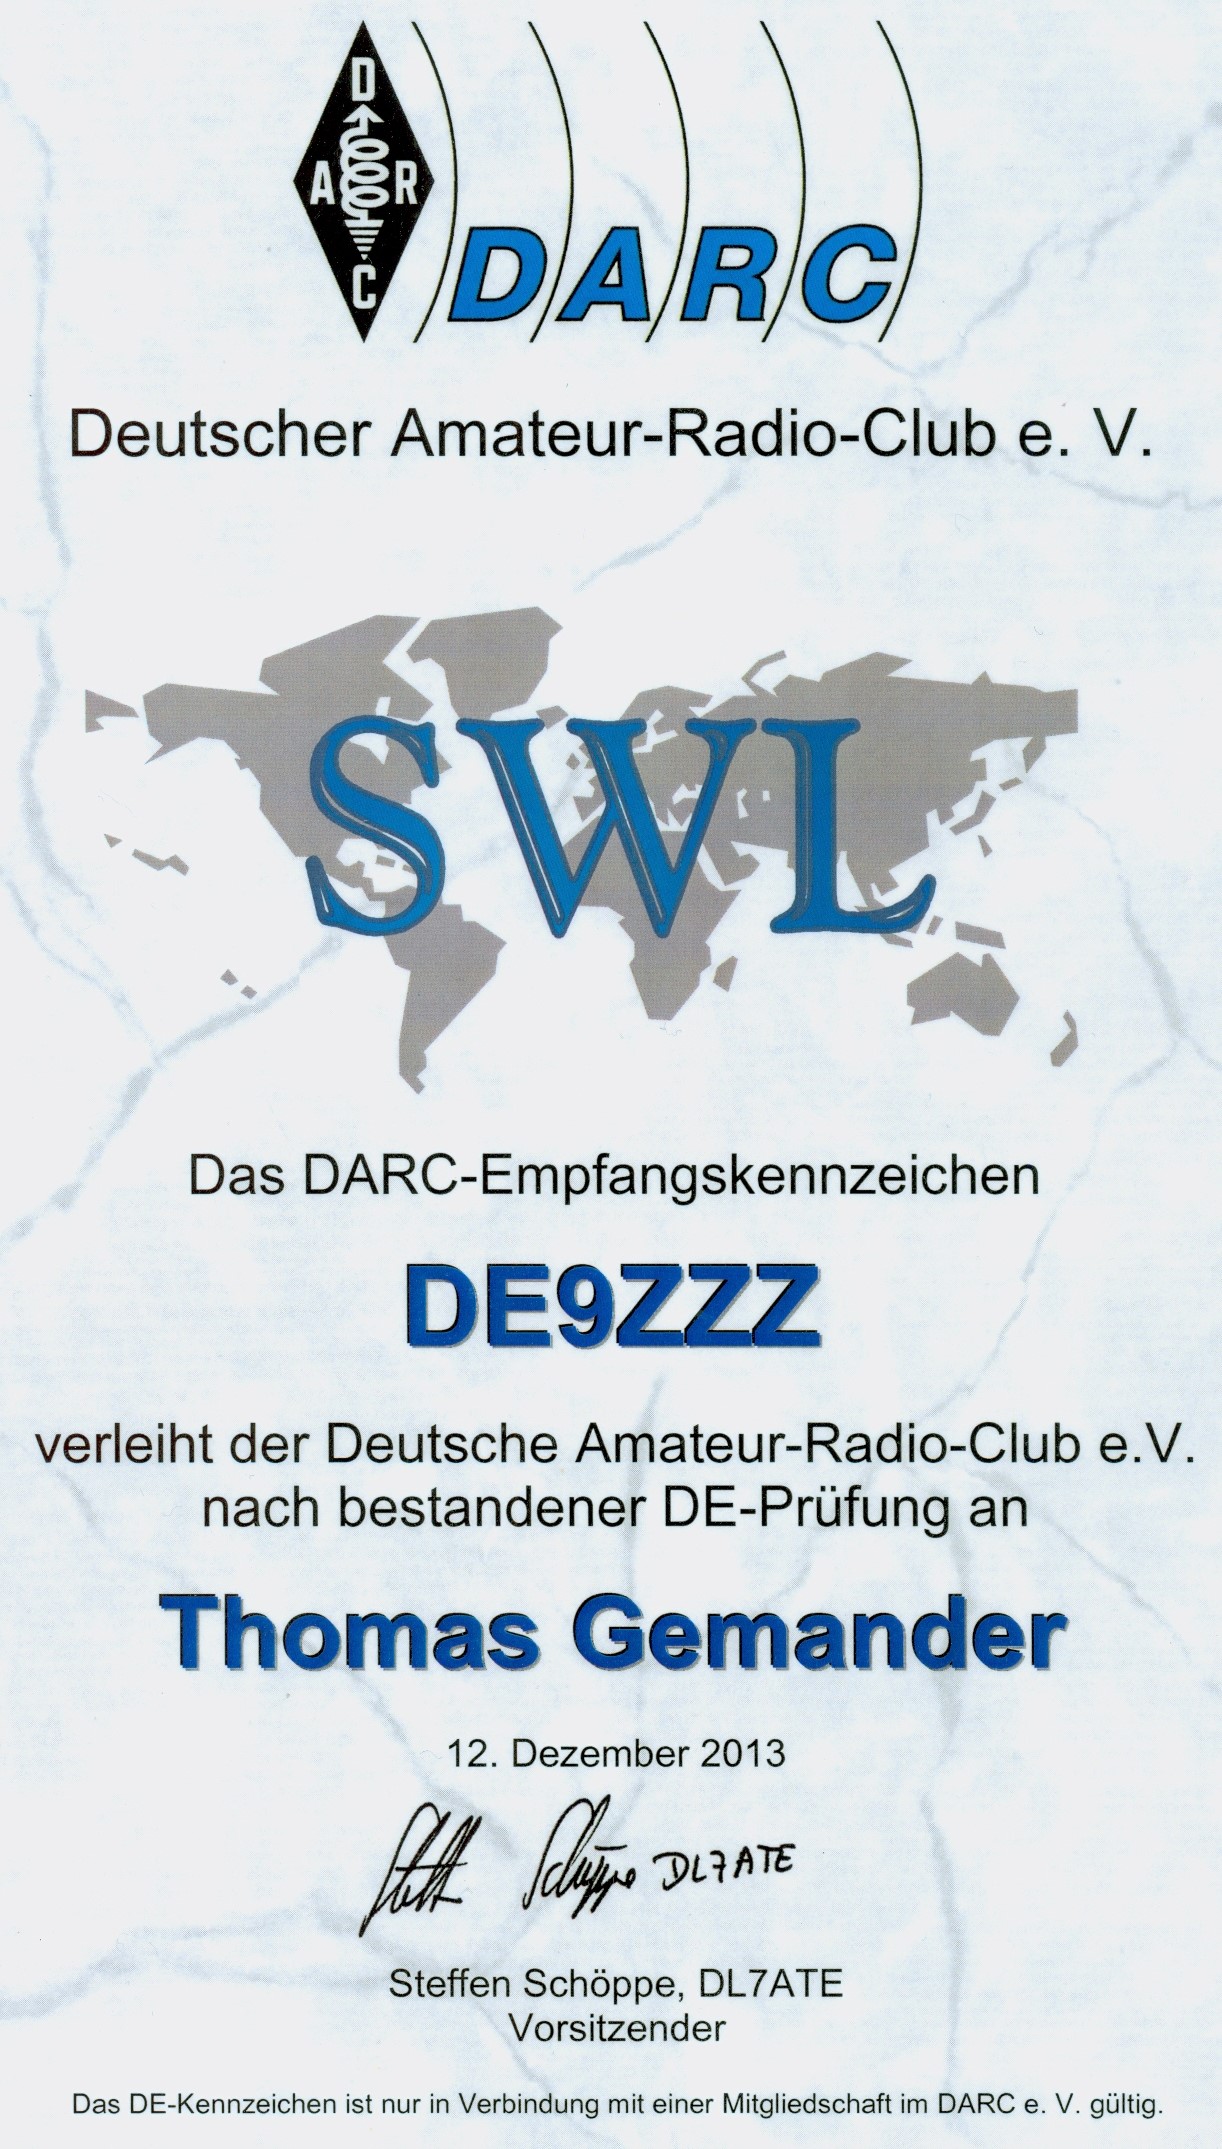 DE9ZZZ Lizenz License